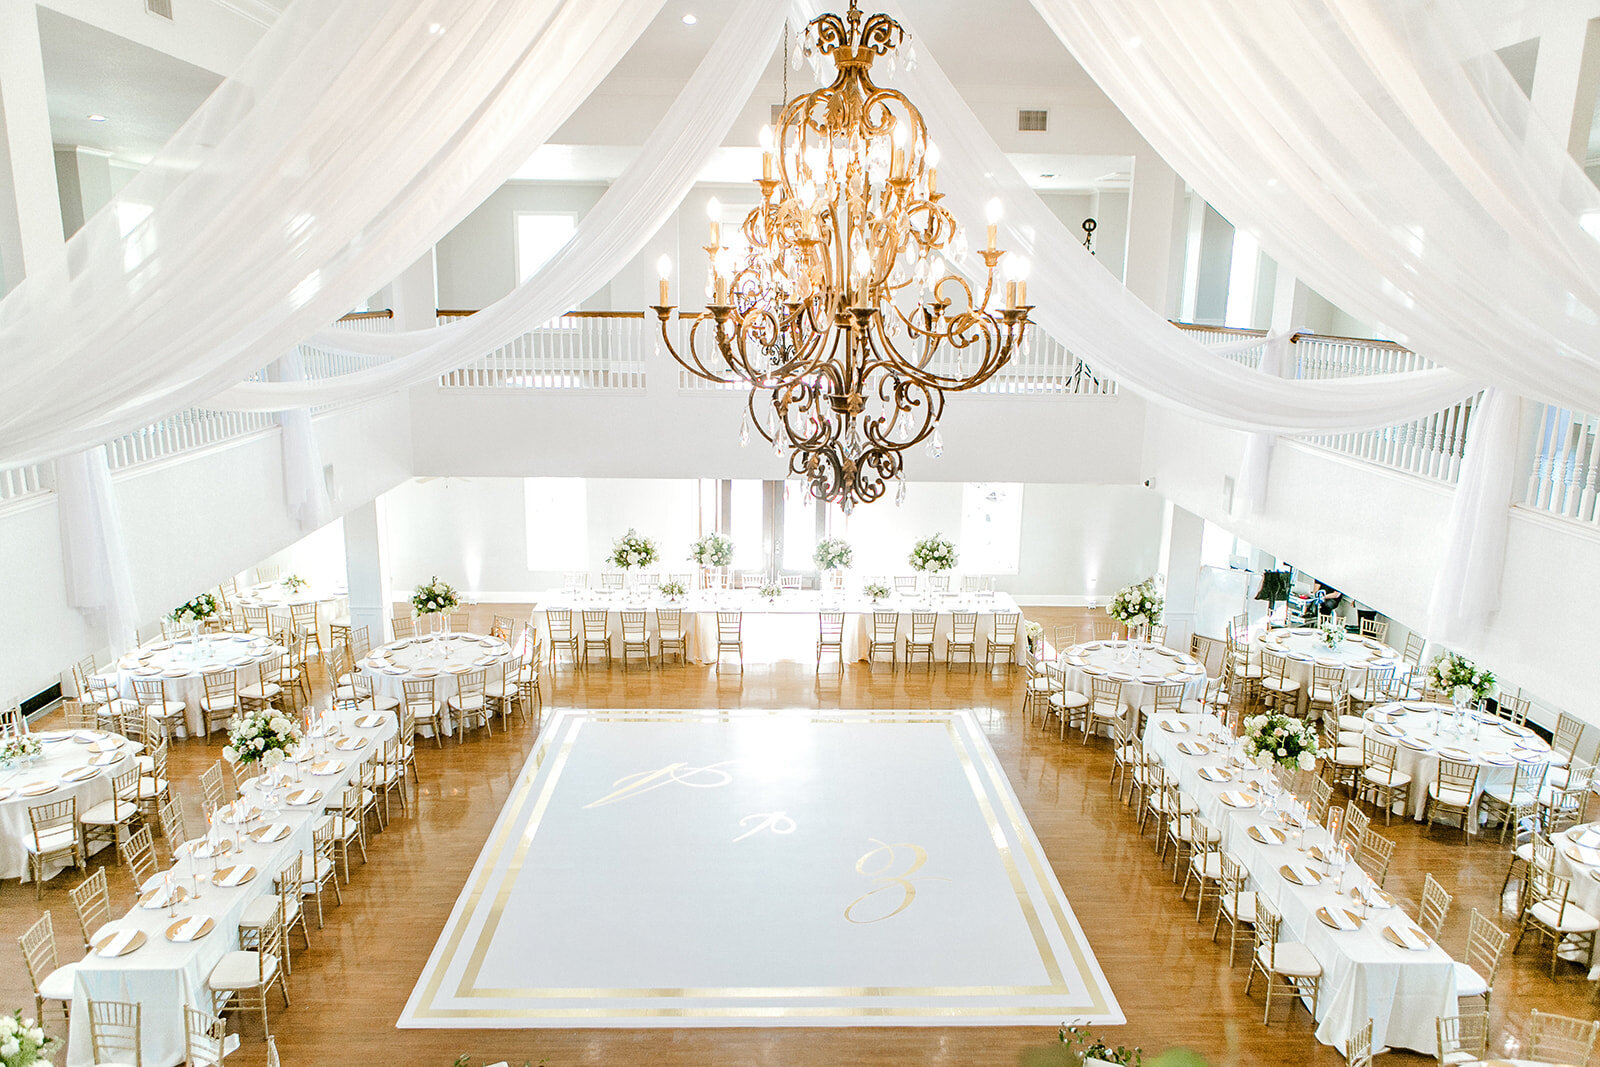 The ballroom set up for a reception with a custom carpet.